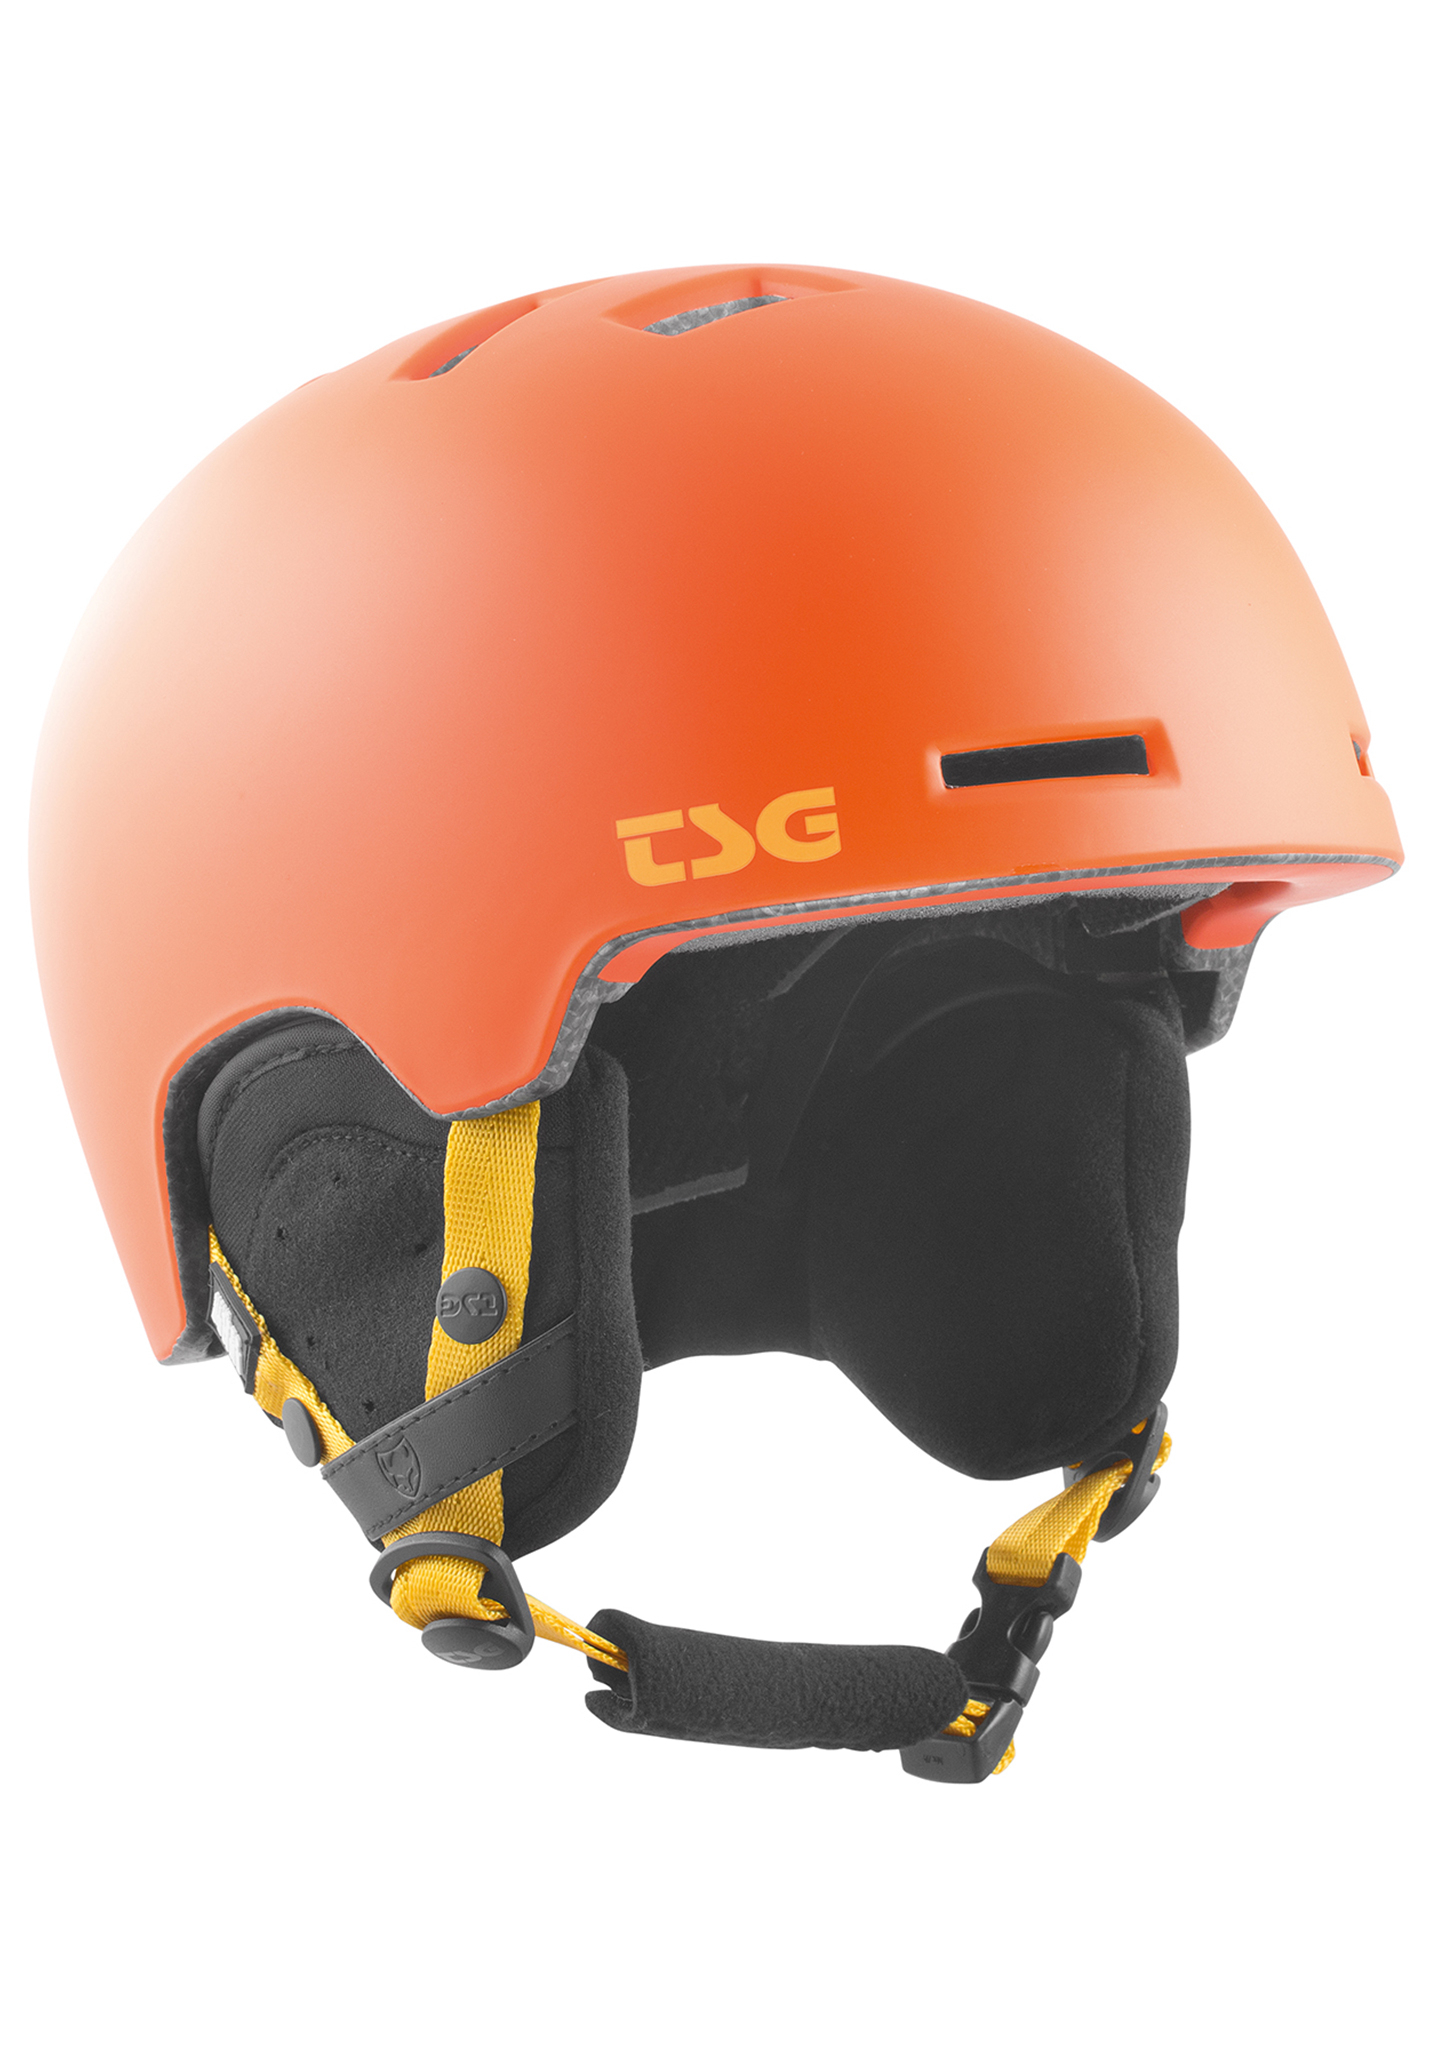 TSG Arctic Nipper Maxi Snowboardhelme orange XXS-XS Helm